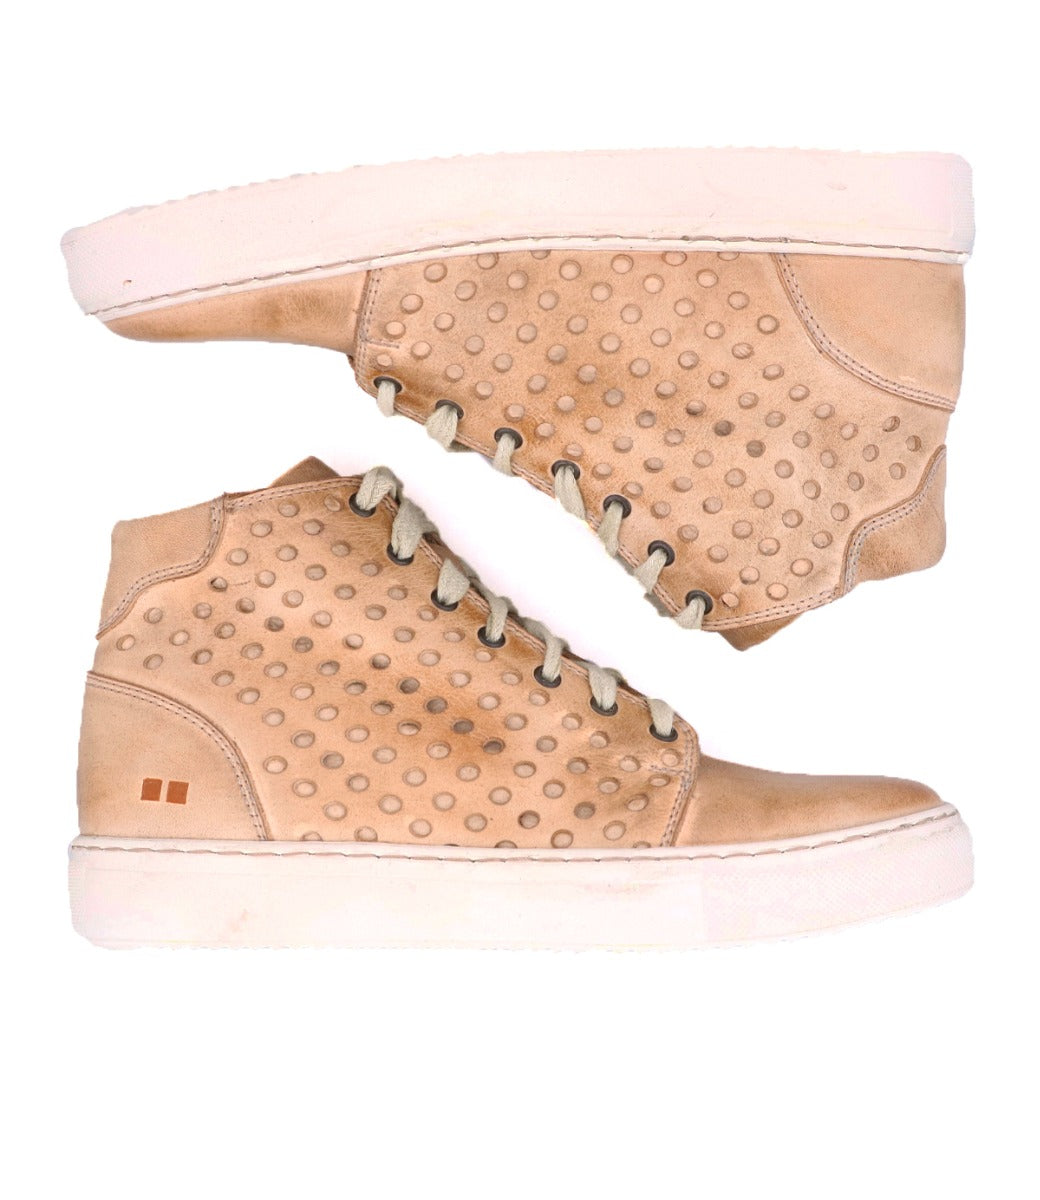 A pair of women's leather sneaker Lirica by Bed Stu.